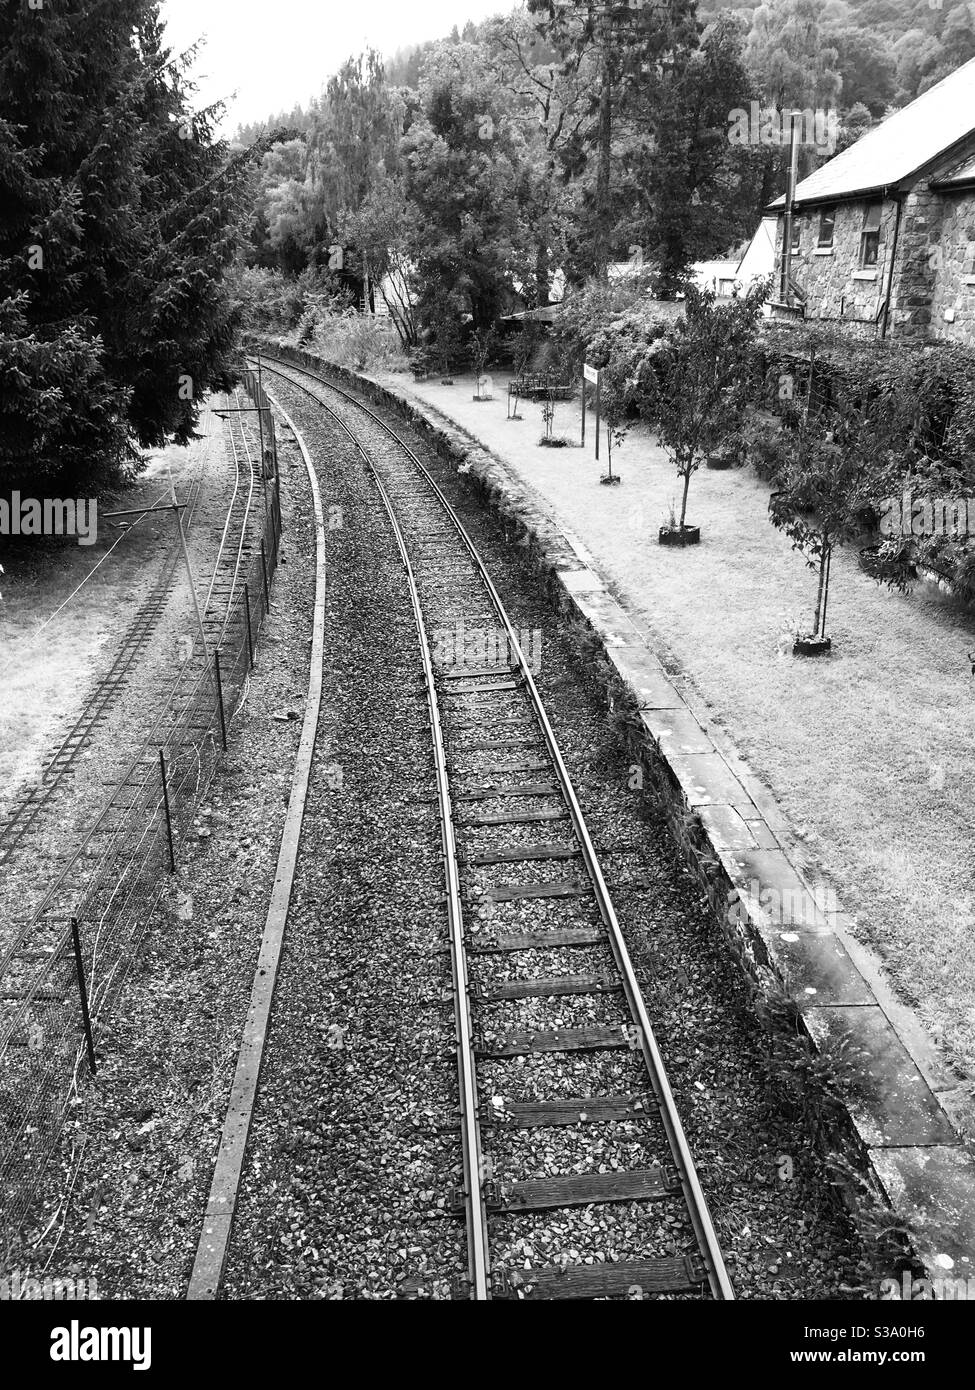 Railway tracks Stock Photo